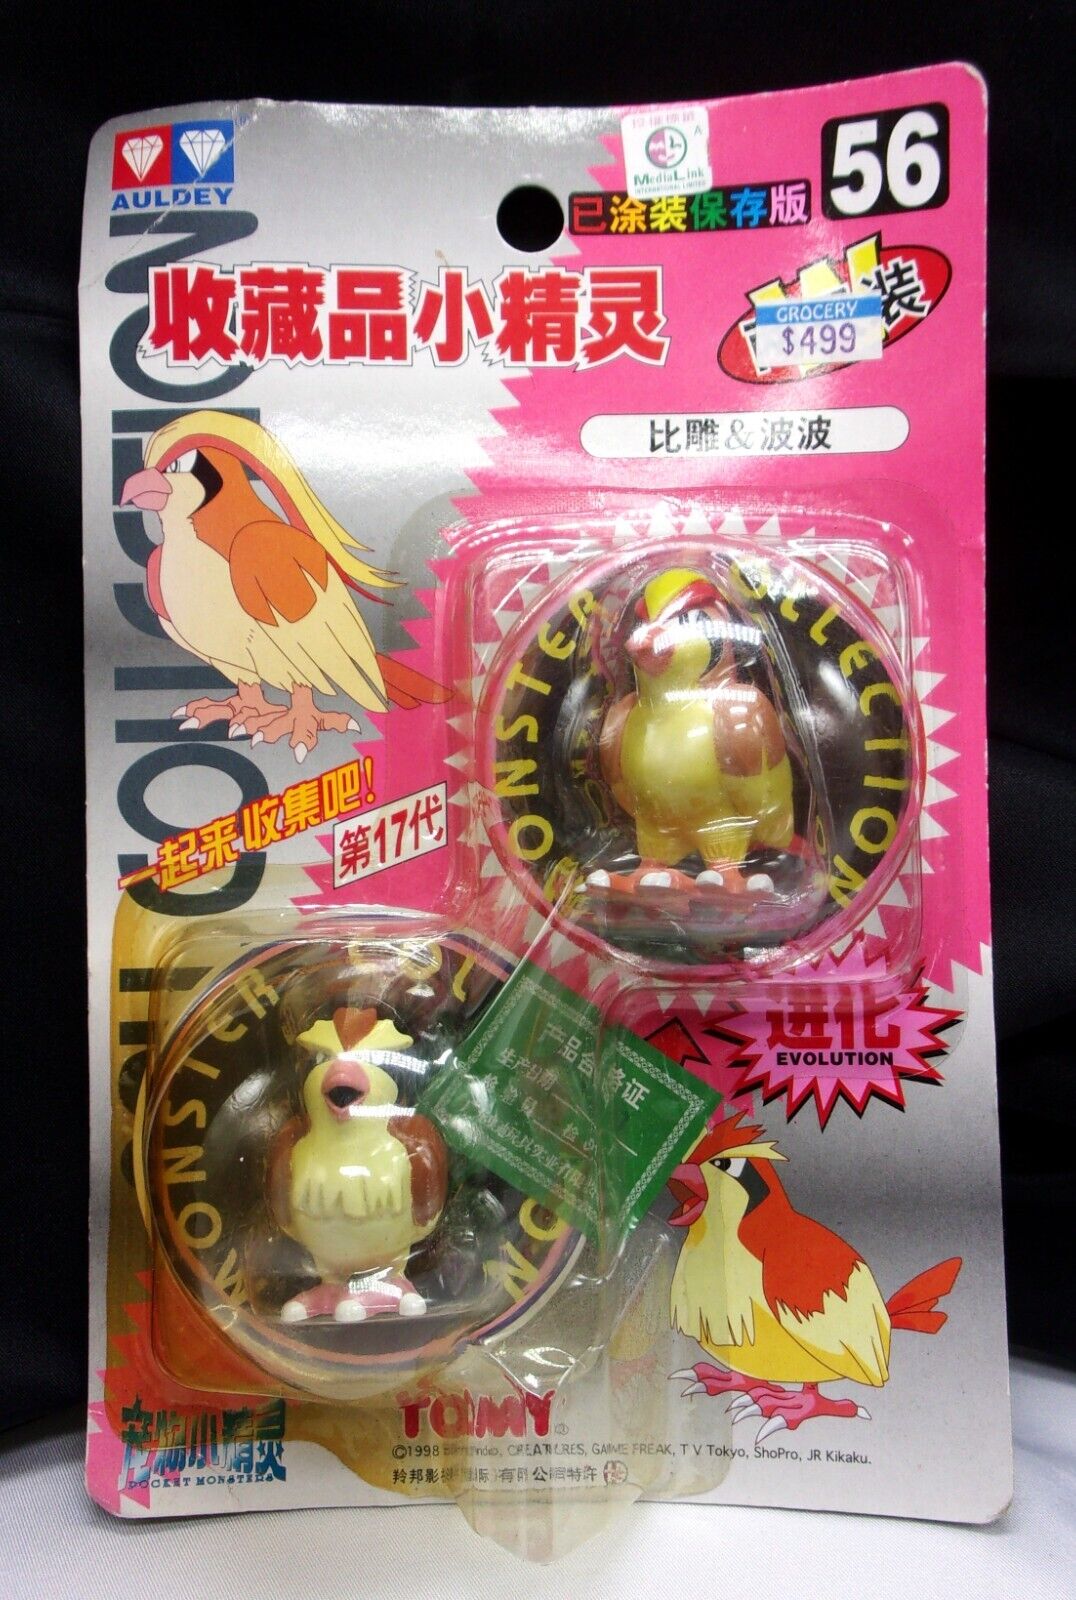 Pidgey & Pidgeot - #56 - VTG AULDEY TOMY Japanese Pokemon Figures Set Pack NIP